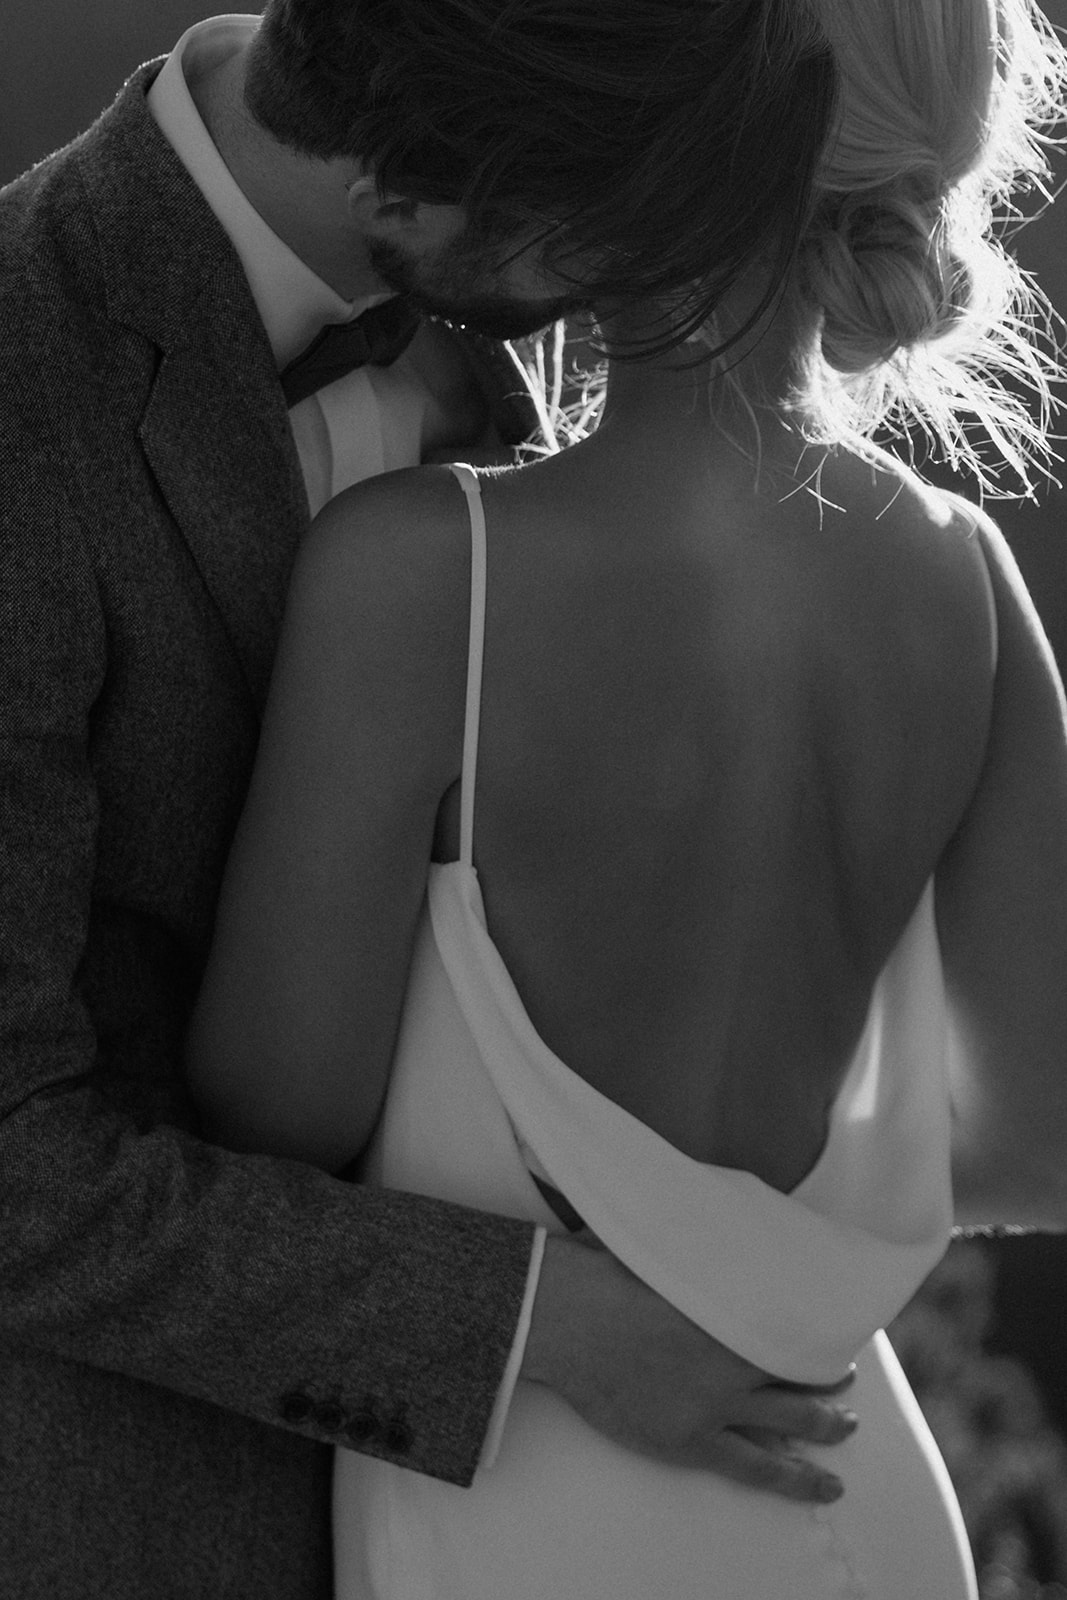 Black and white intimate wedding photo